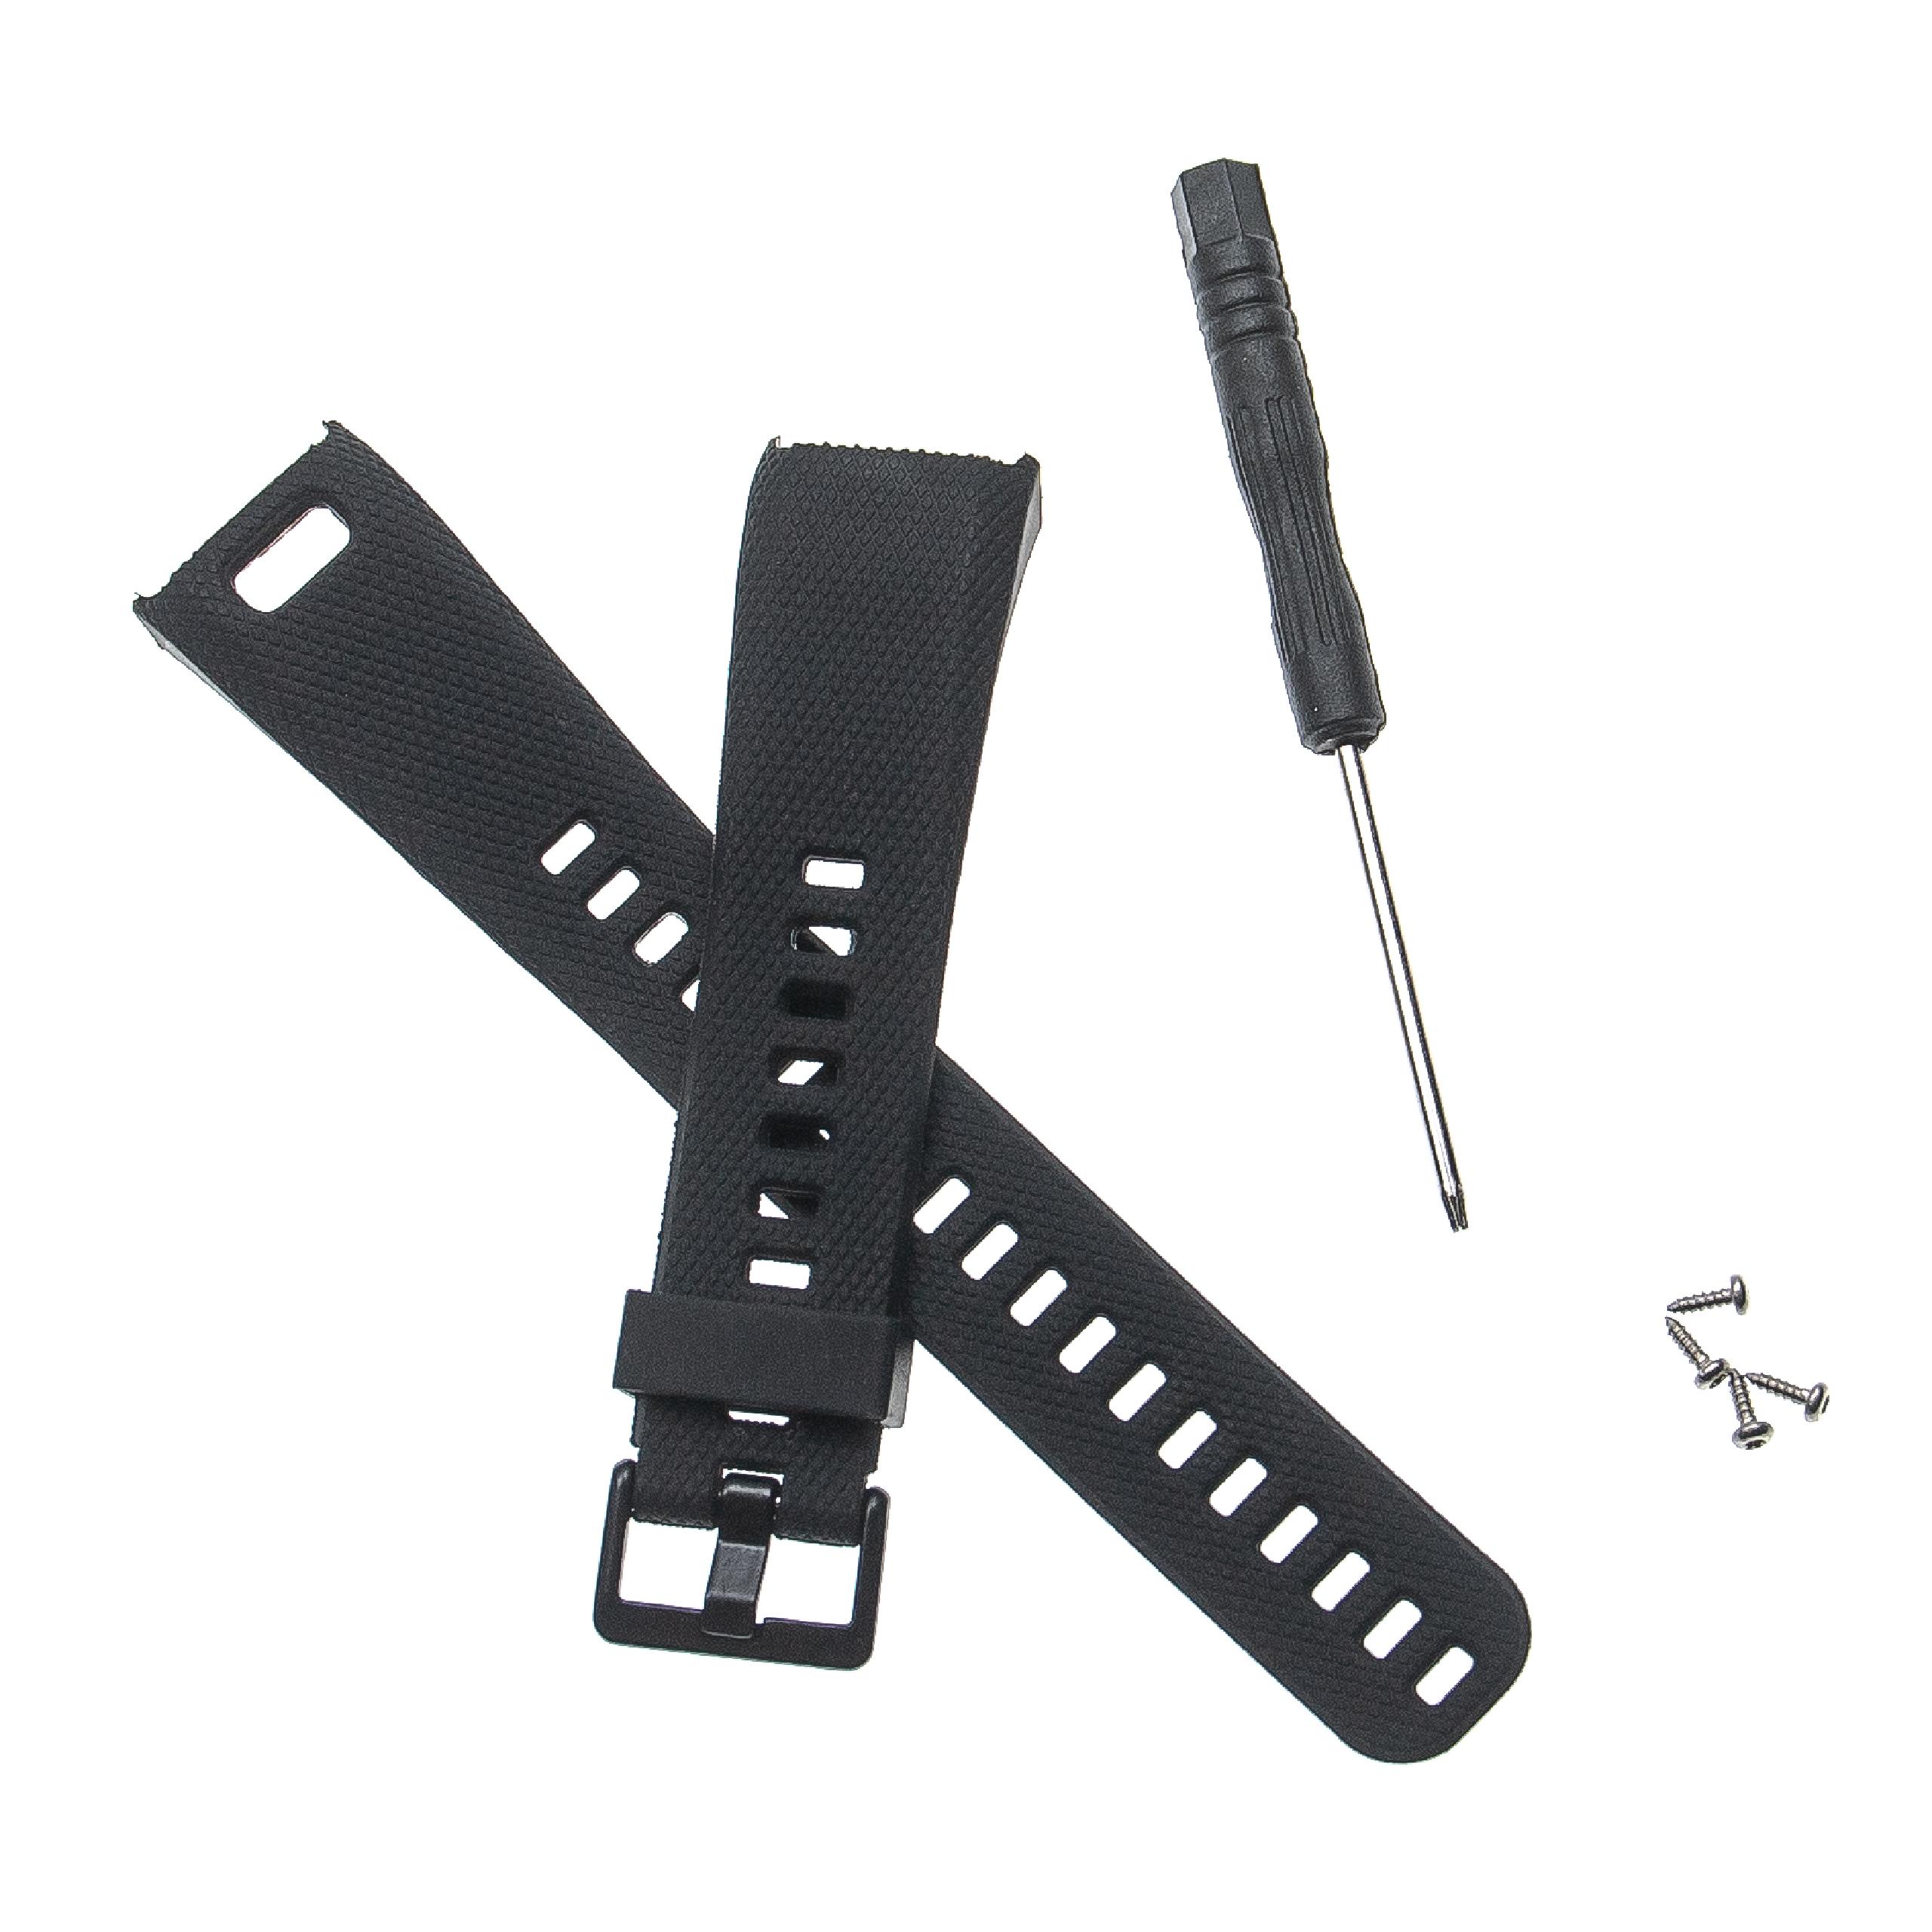 wristband for Garmin Vivosmart Smartwatch - 12.7 + 8.8 cm long, 20mm wide, TPU, black